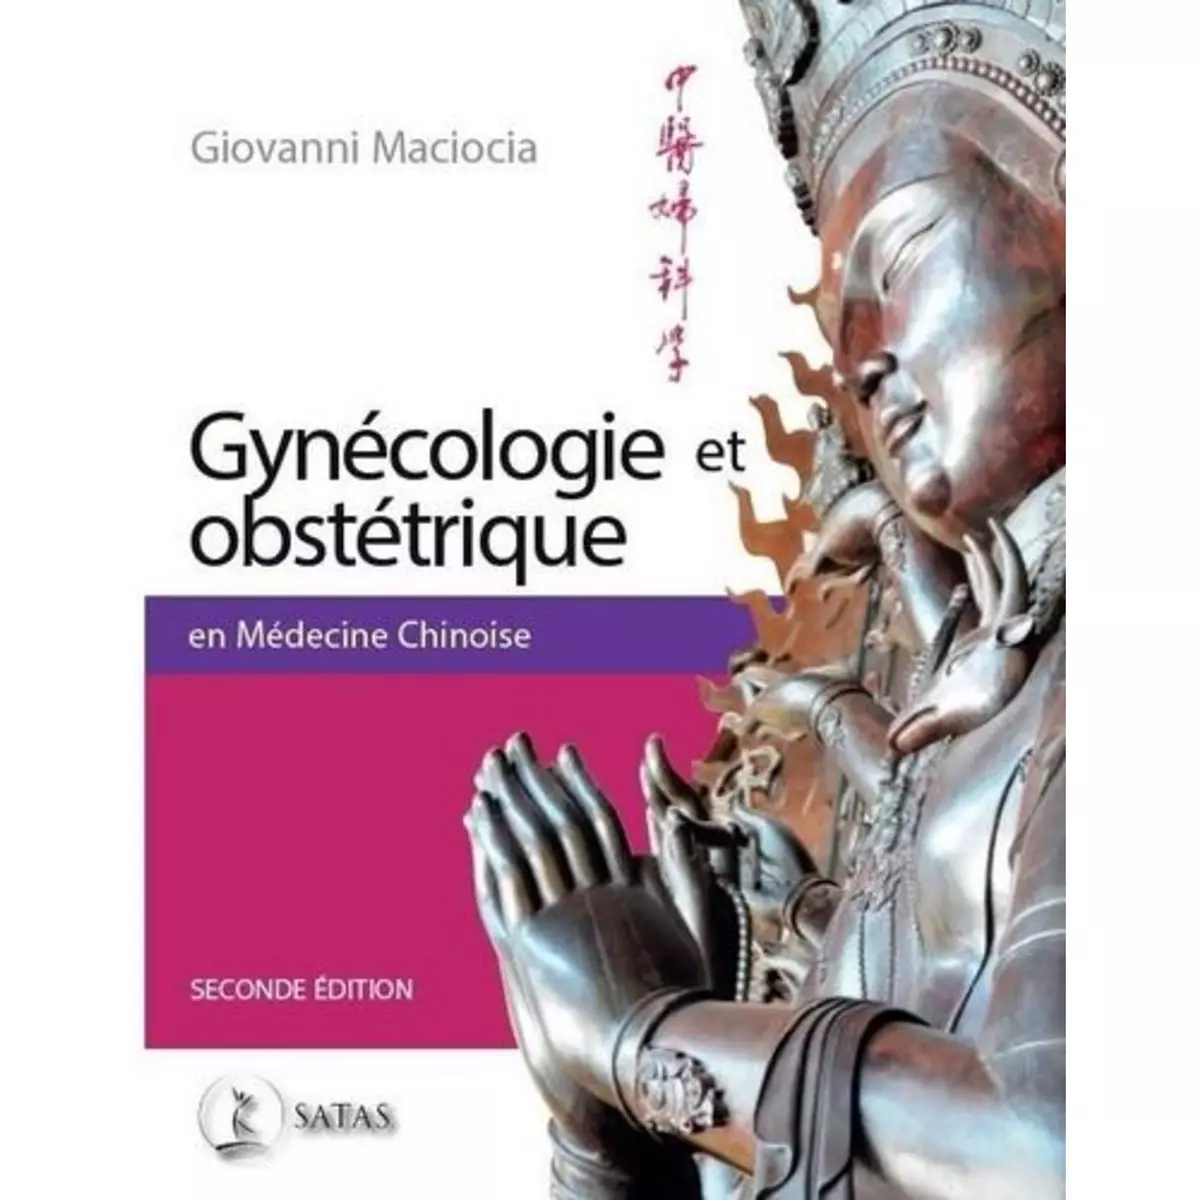  GYNECOLOGIE ET OBSTETRIQUE EN MEDECINE CHINOISE. 2E EDITION, Maciocia Giovanni